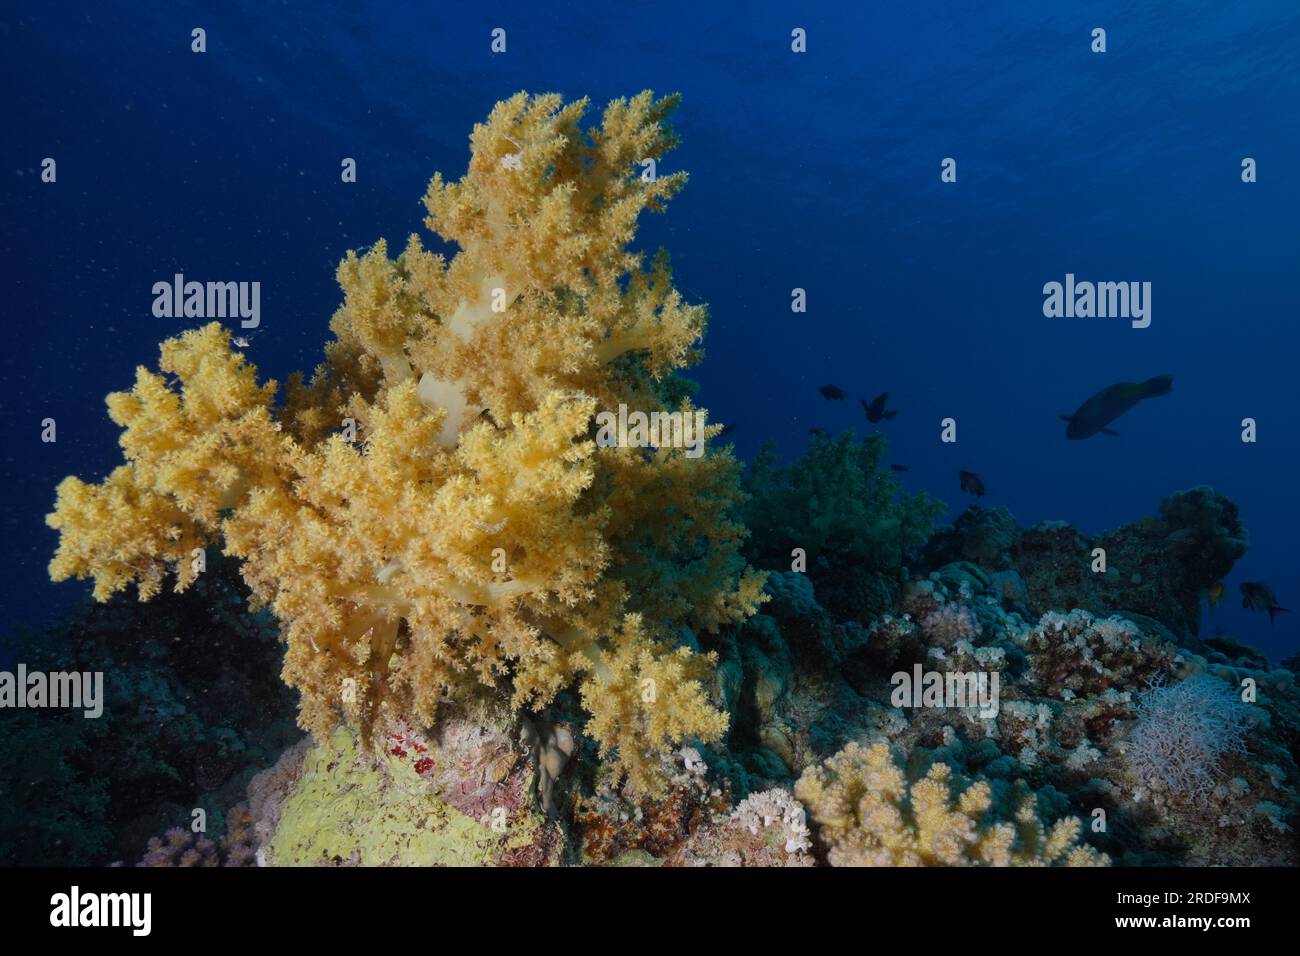 Broccoli tree (Litophyton arboreum), Fury Shoals reef dive site, Red Sea, Egypt Stock Photo